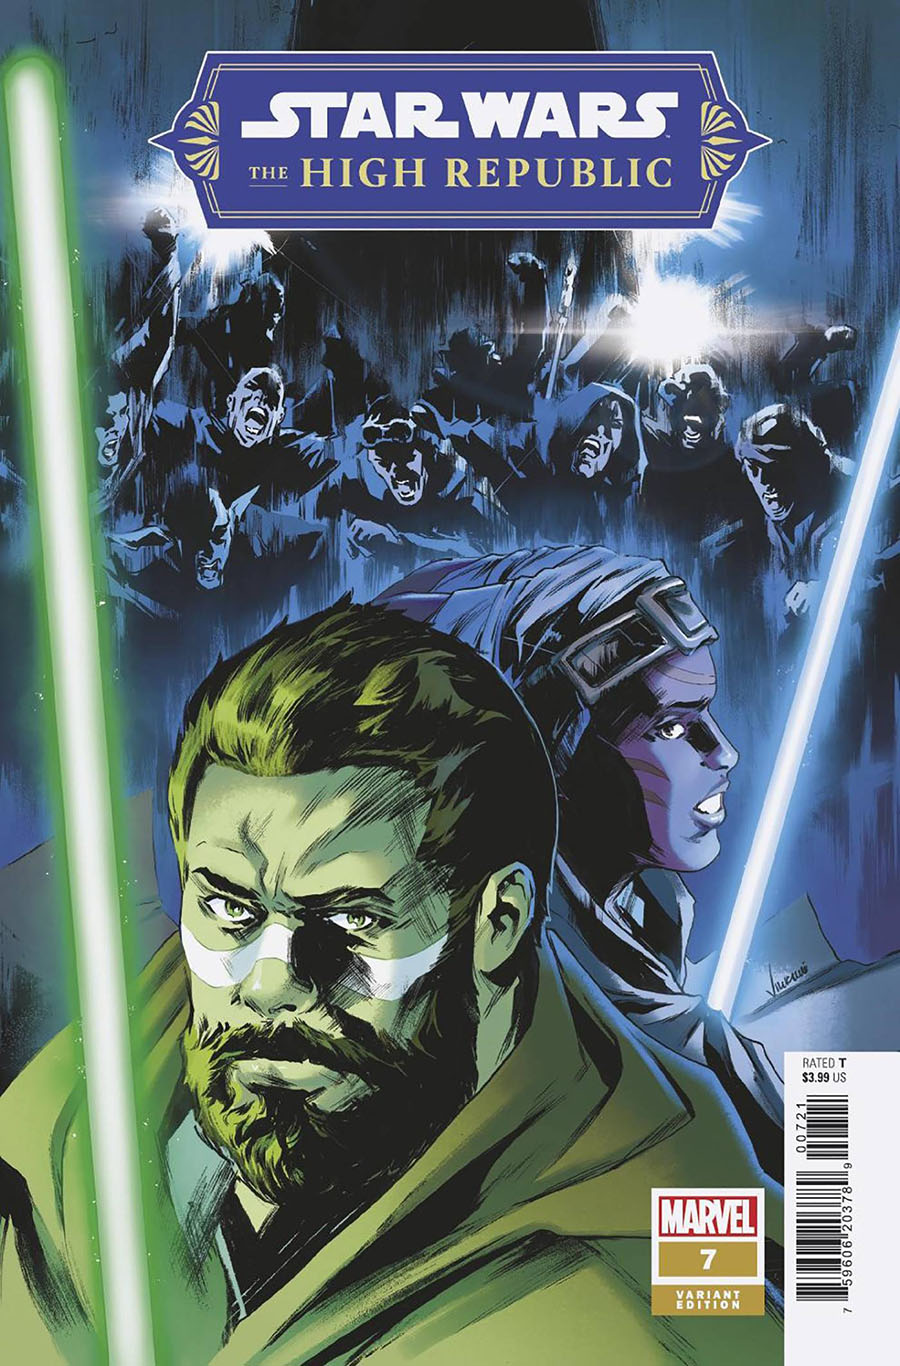 Star Wars The High Republic Vol 2 #7 Cover B Variant Paolo Villanelli Cover